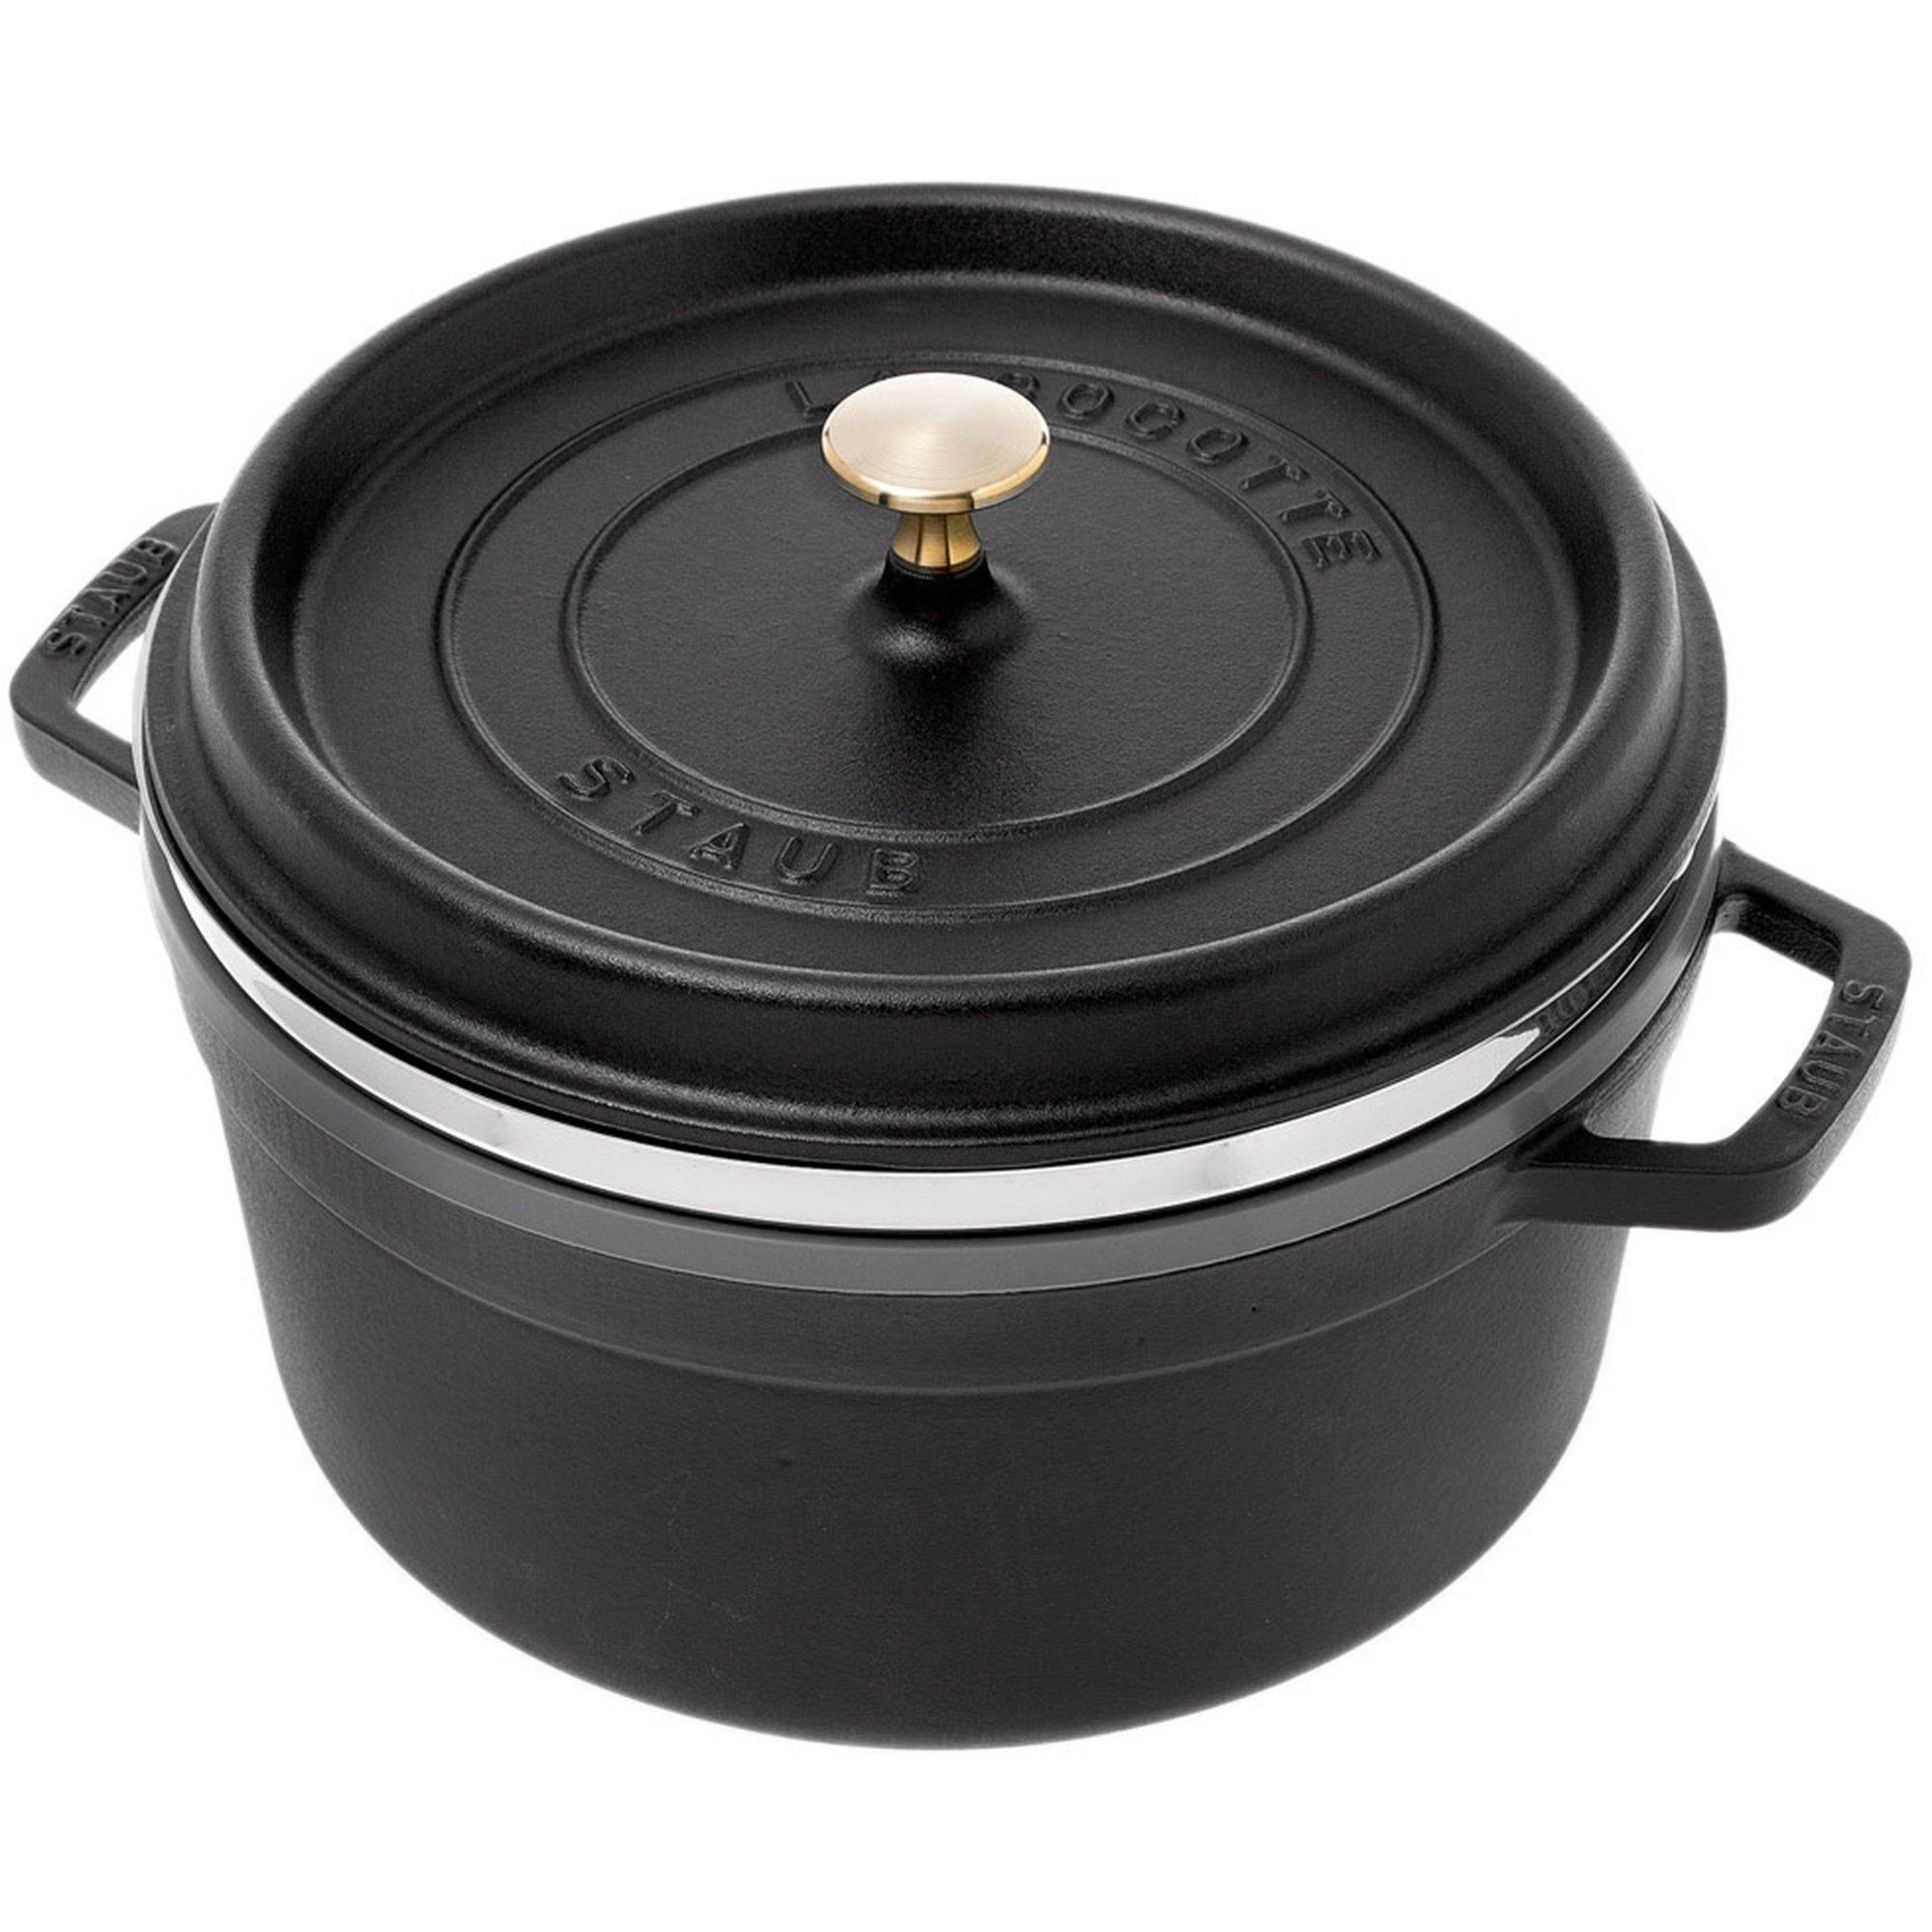 Staub roasting pan - cocotte 26cm, 5,2L, black with steam tray